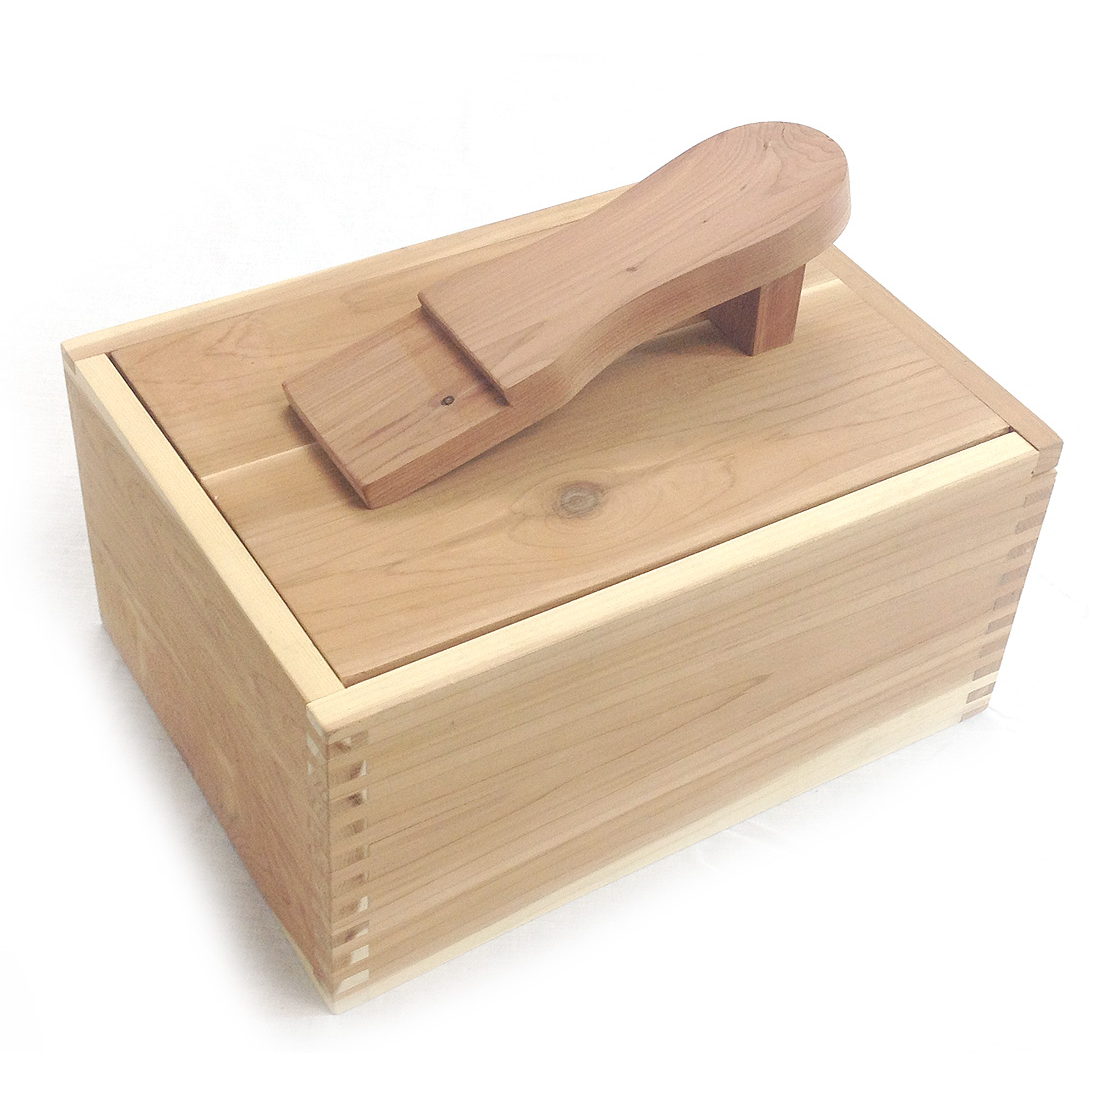 HANGERWORLD Natural Cedar Wood Shoe Shine Care Box with Foot Rest